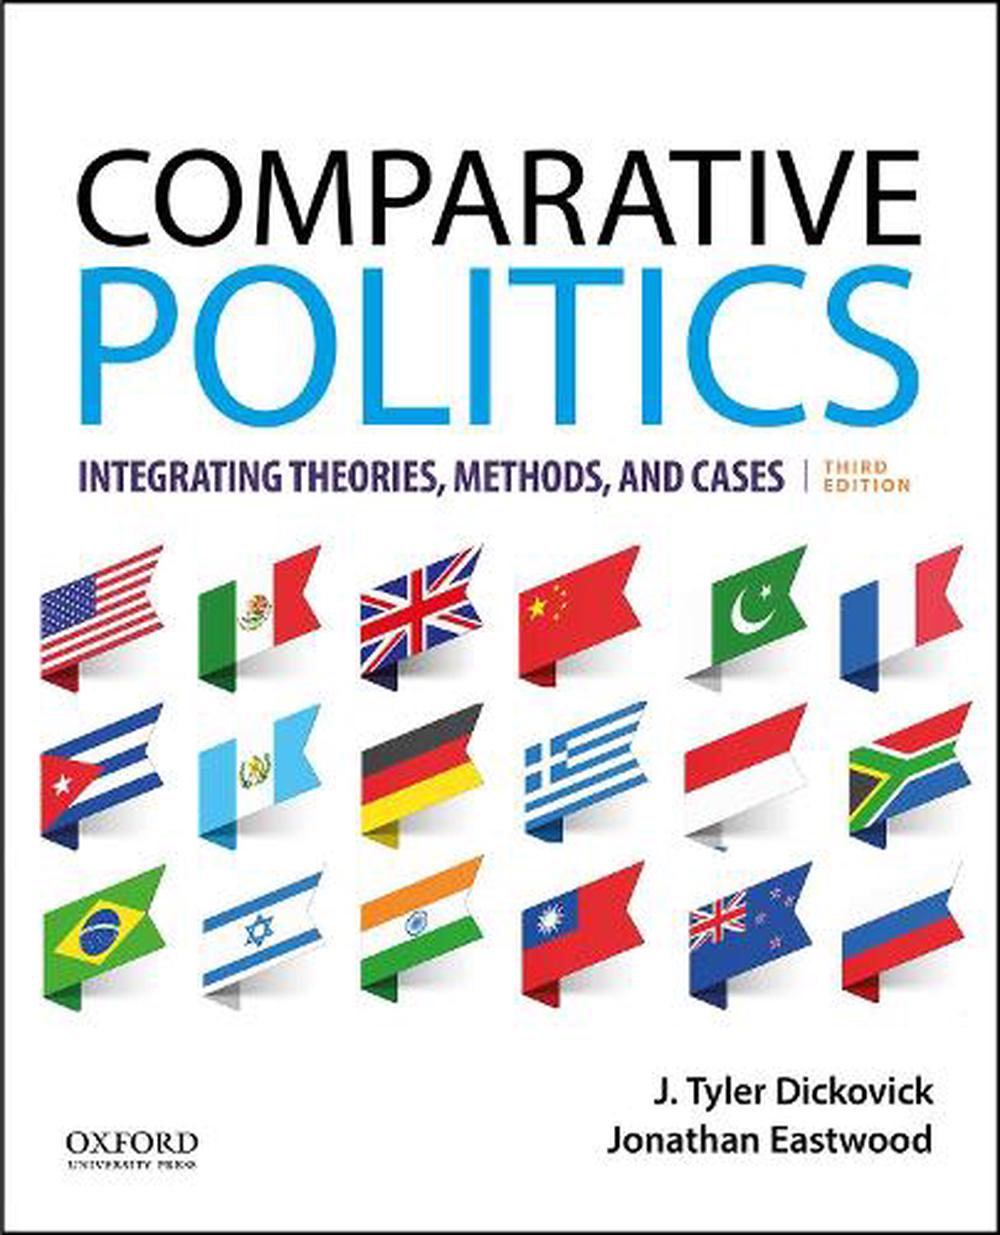 case study method of comparative politics